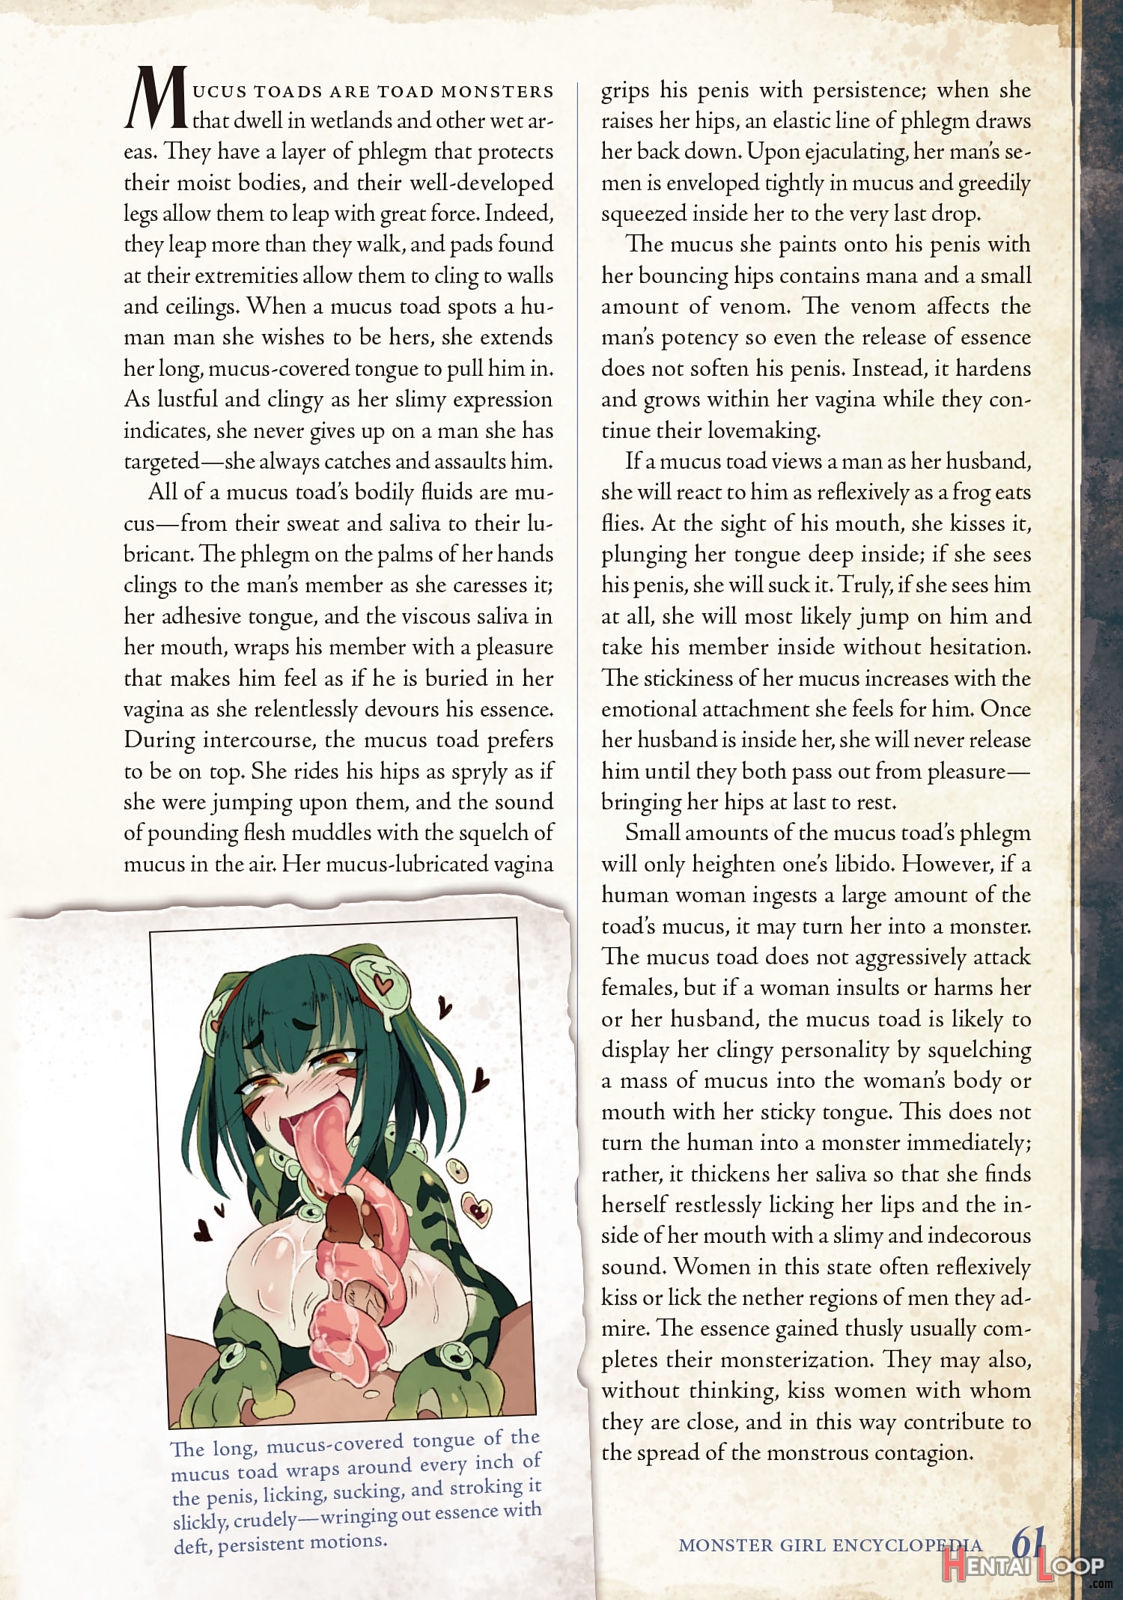 Monster Girl Encyclopedia Vol. 2 page 62